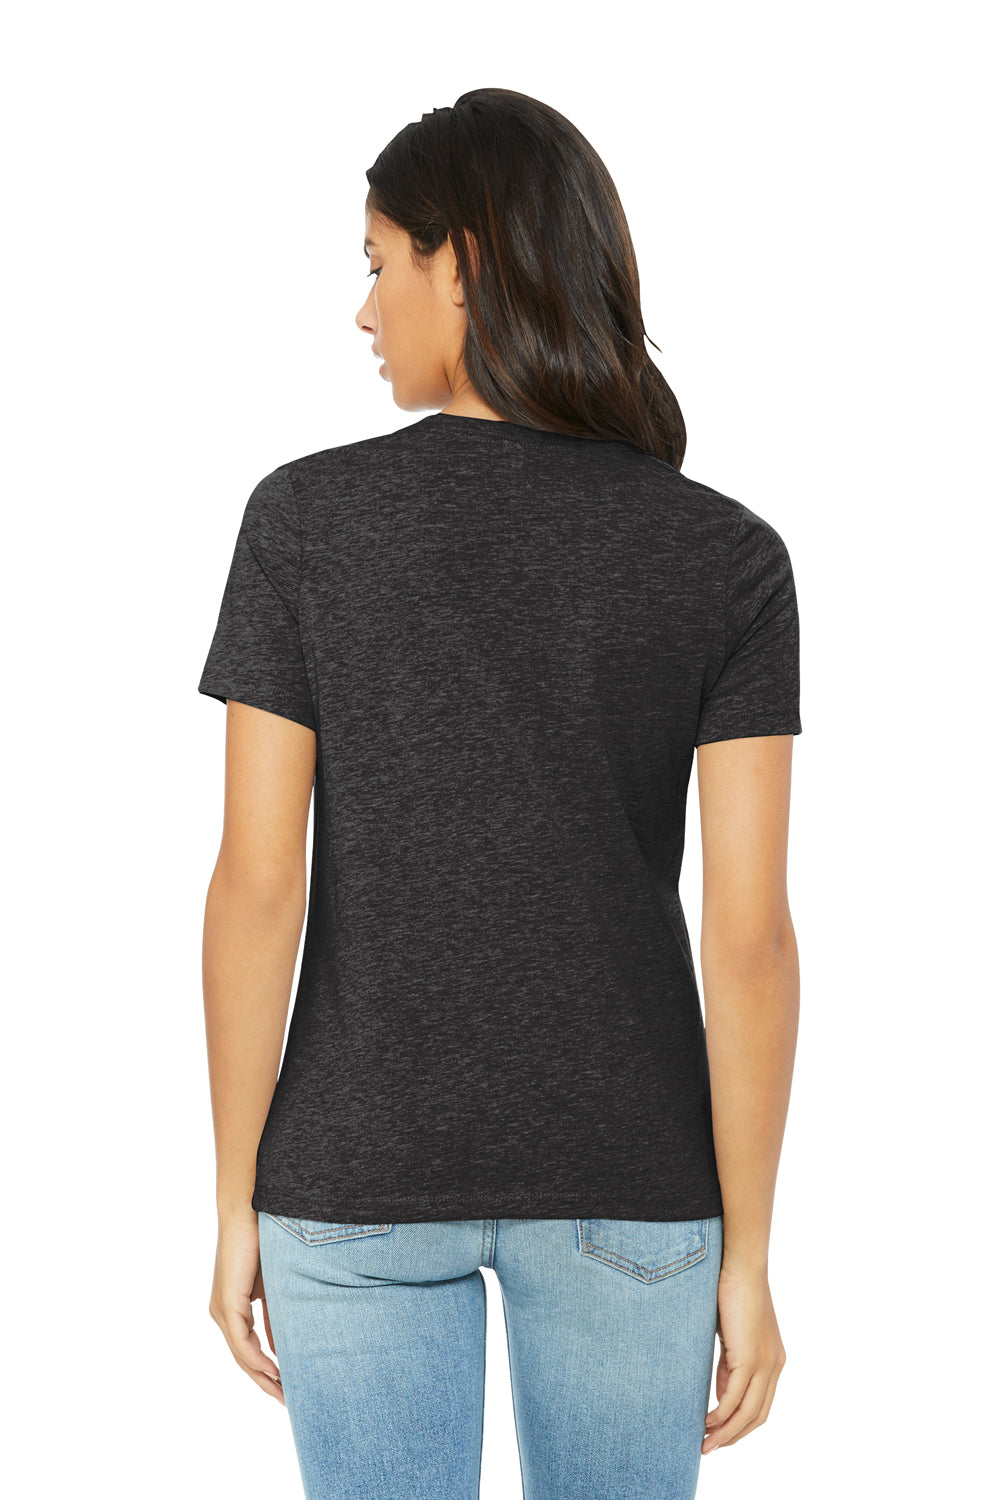 Bella + Canvas BC6413 Womens Short Sleeve Crewneck T-Shirt Charcoal Black Model Back